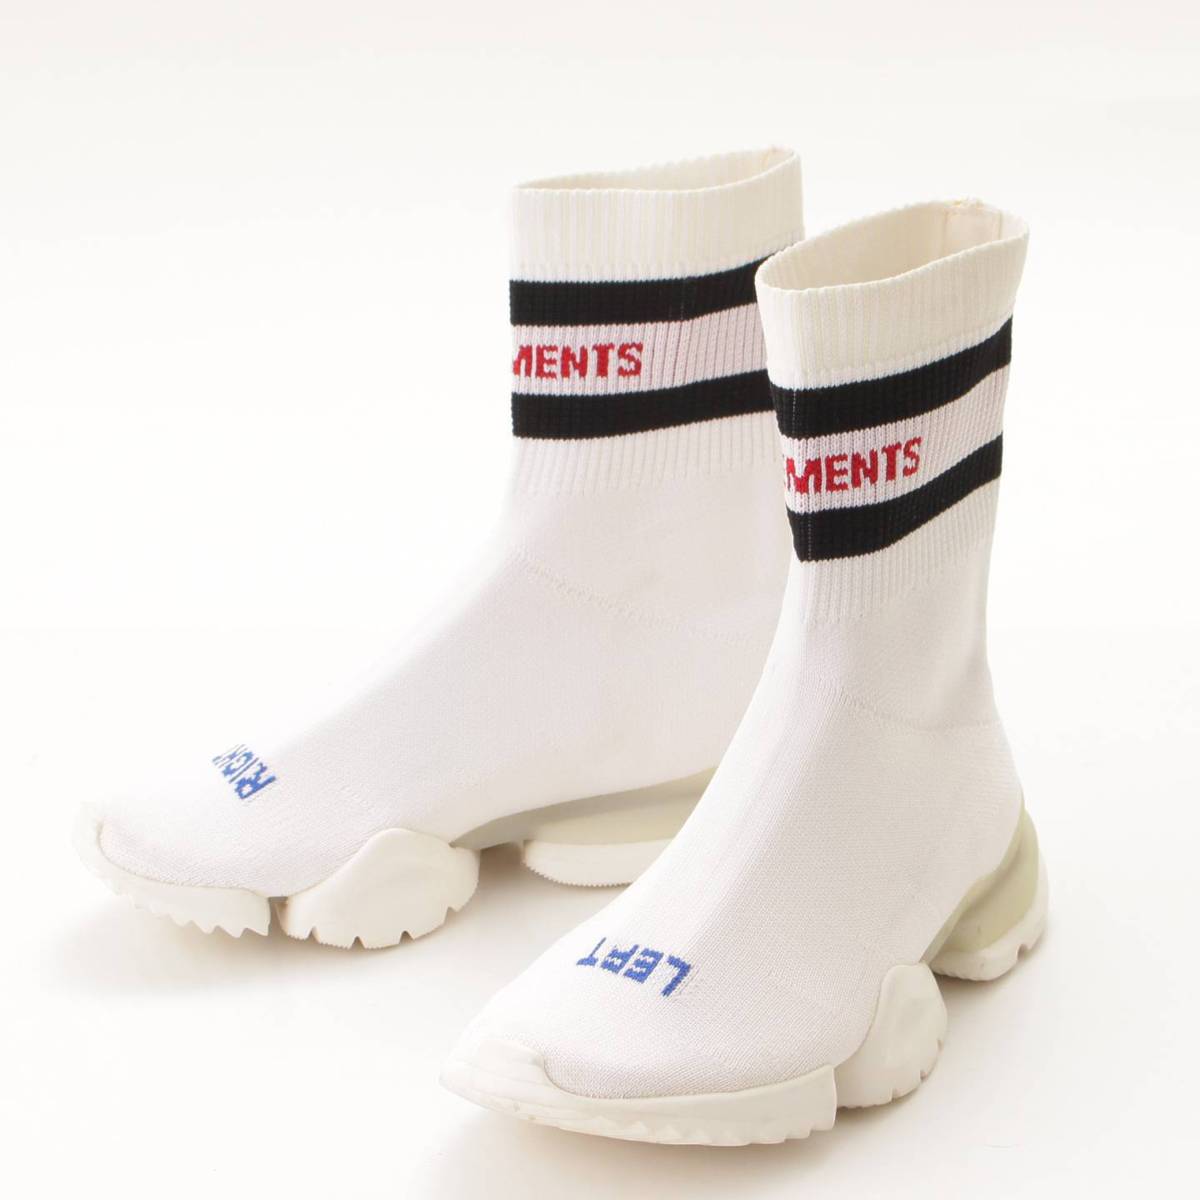 VETEMENTS×Reebok Sock Runner High Top Sneaker CN3309 ヴェトモン×リーボック ソックランナー ハイトップスニーカー ハイカットスニーカー ライトグレー サイズUS7.5(25.5cm) 【221017】【-A】【me04】